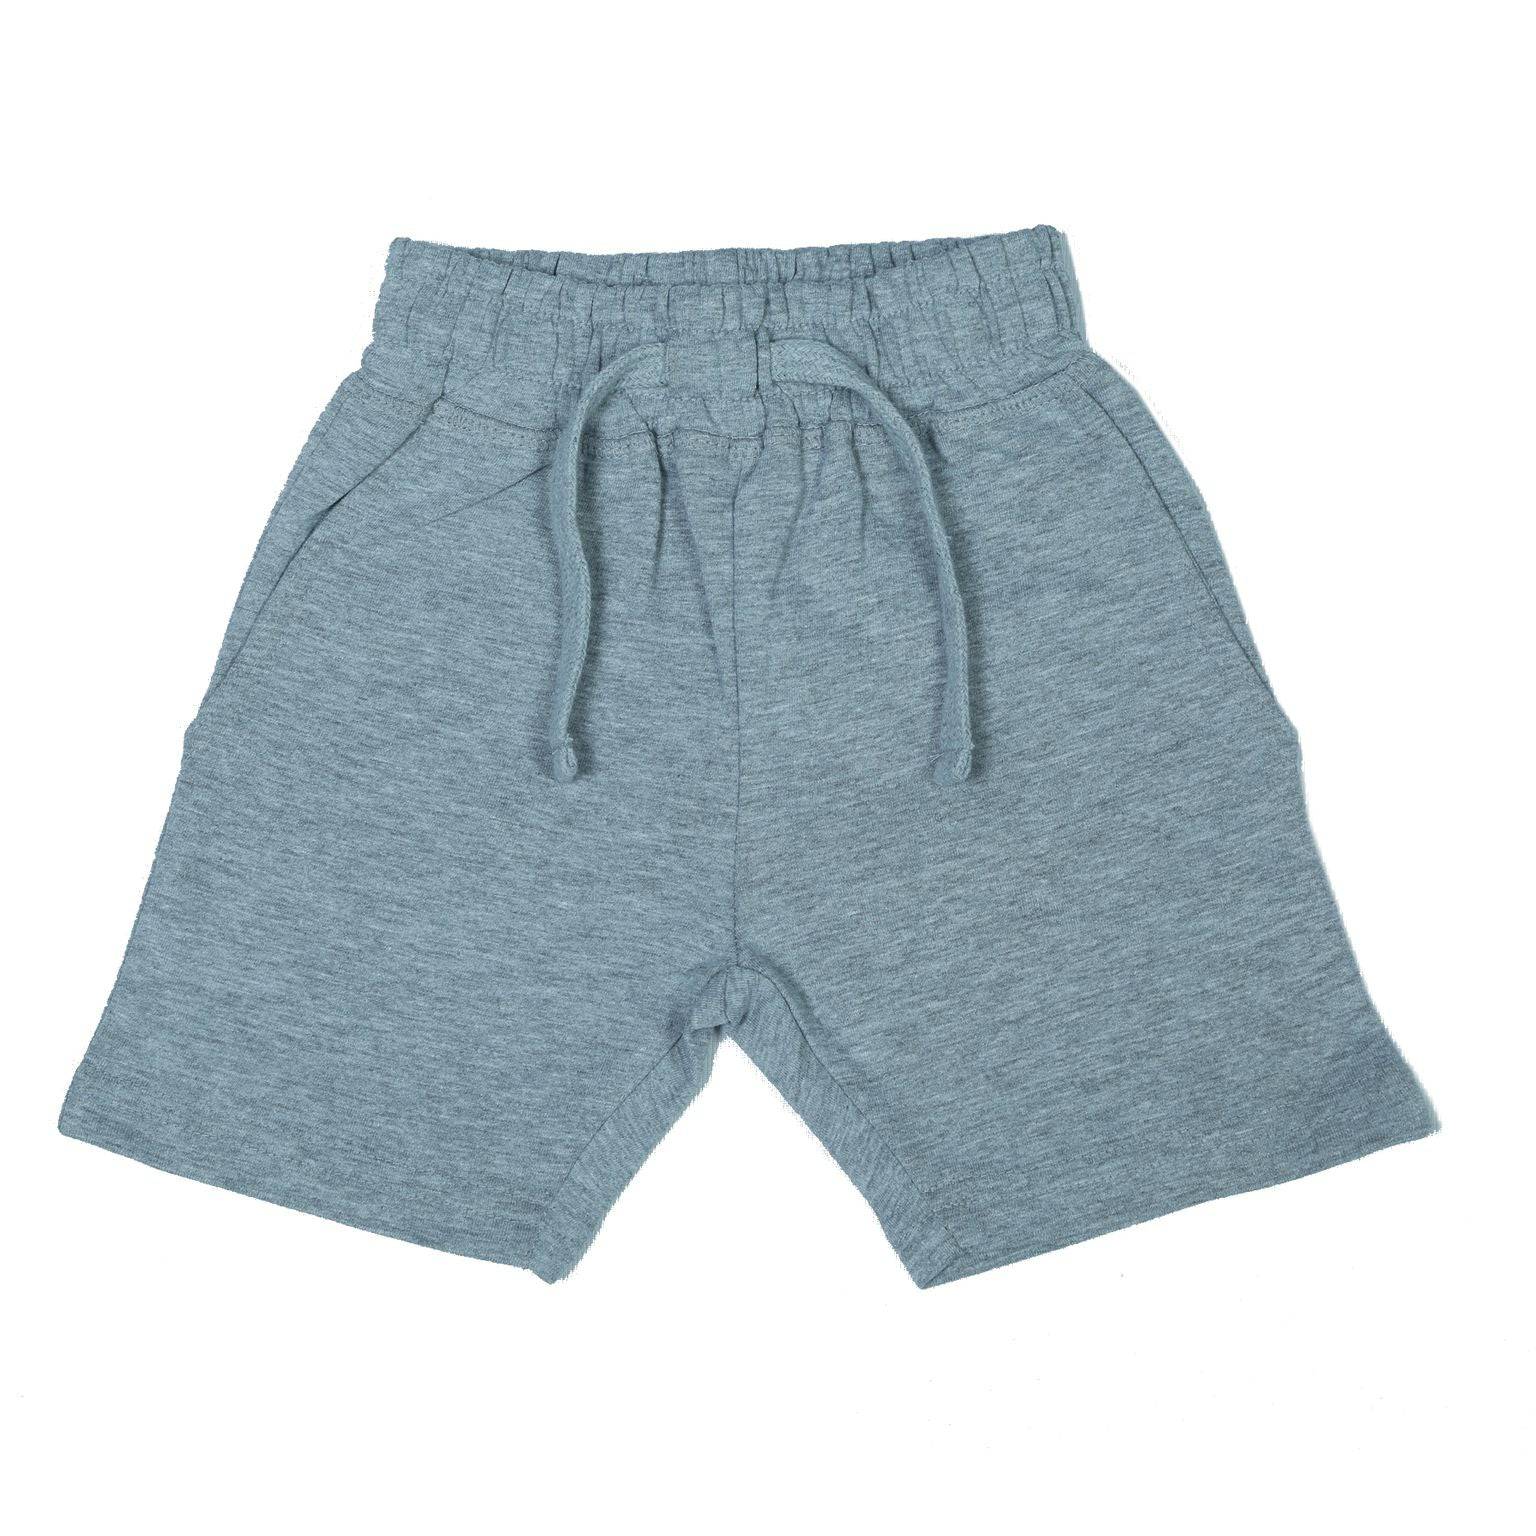 Heather Grey Comfy Shorts - Twinkle Twinkle Little One